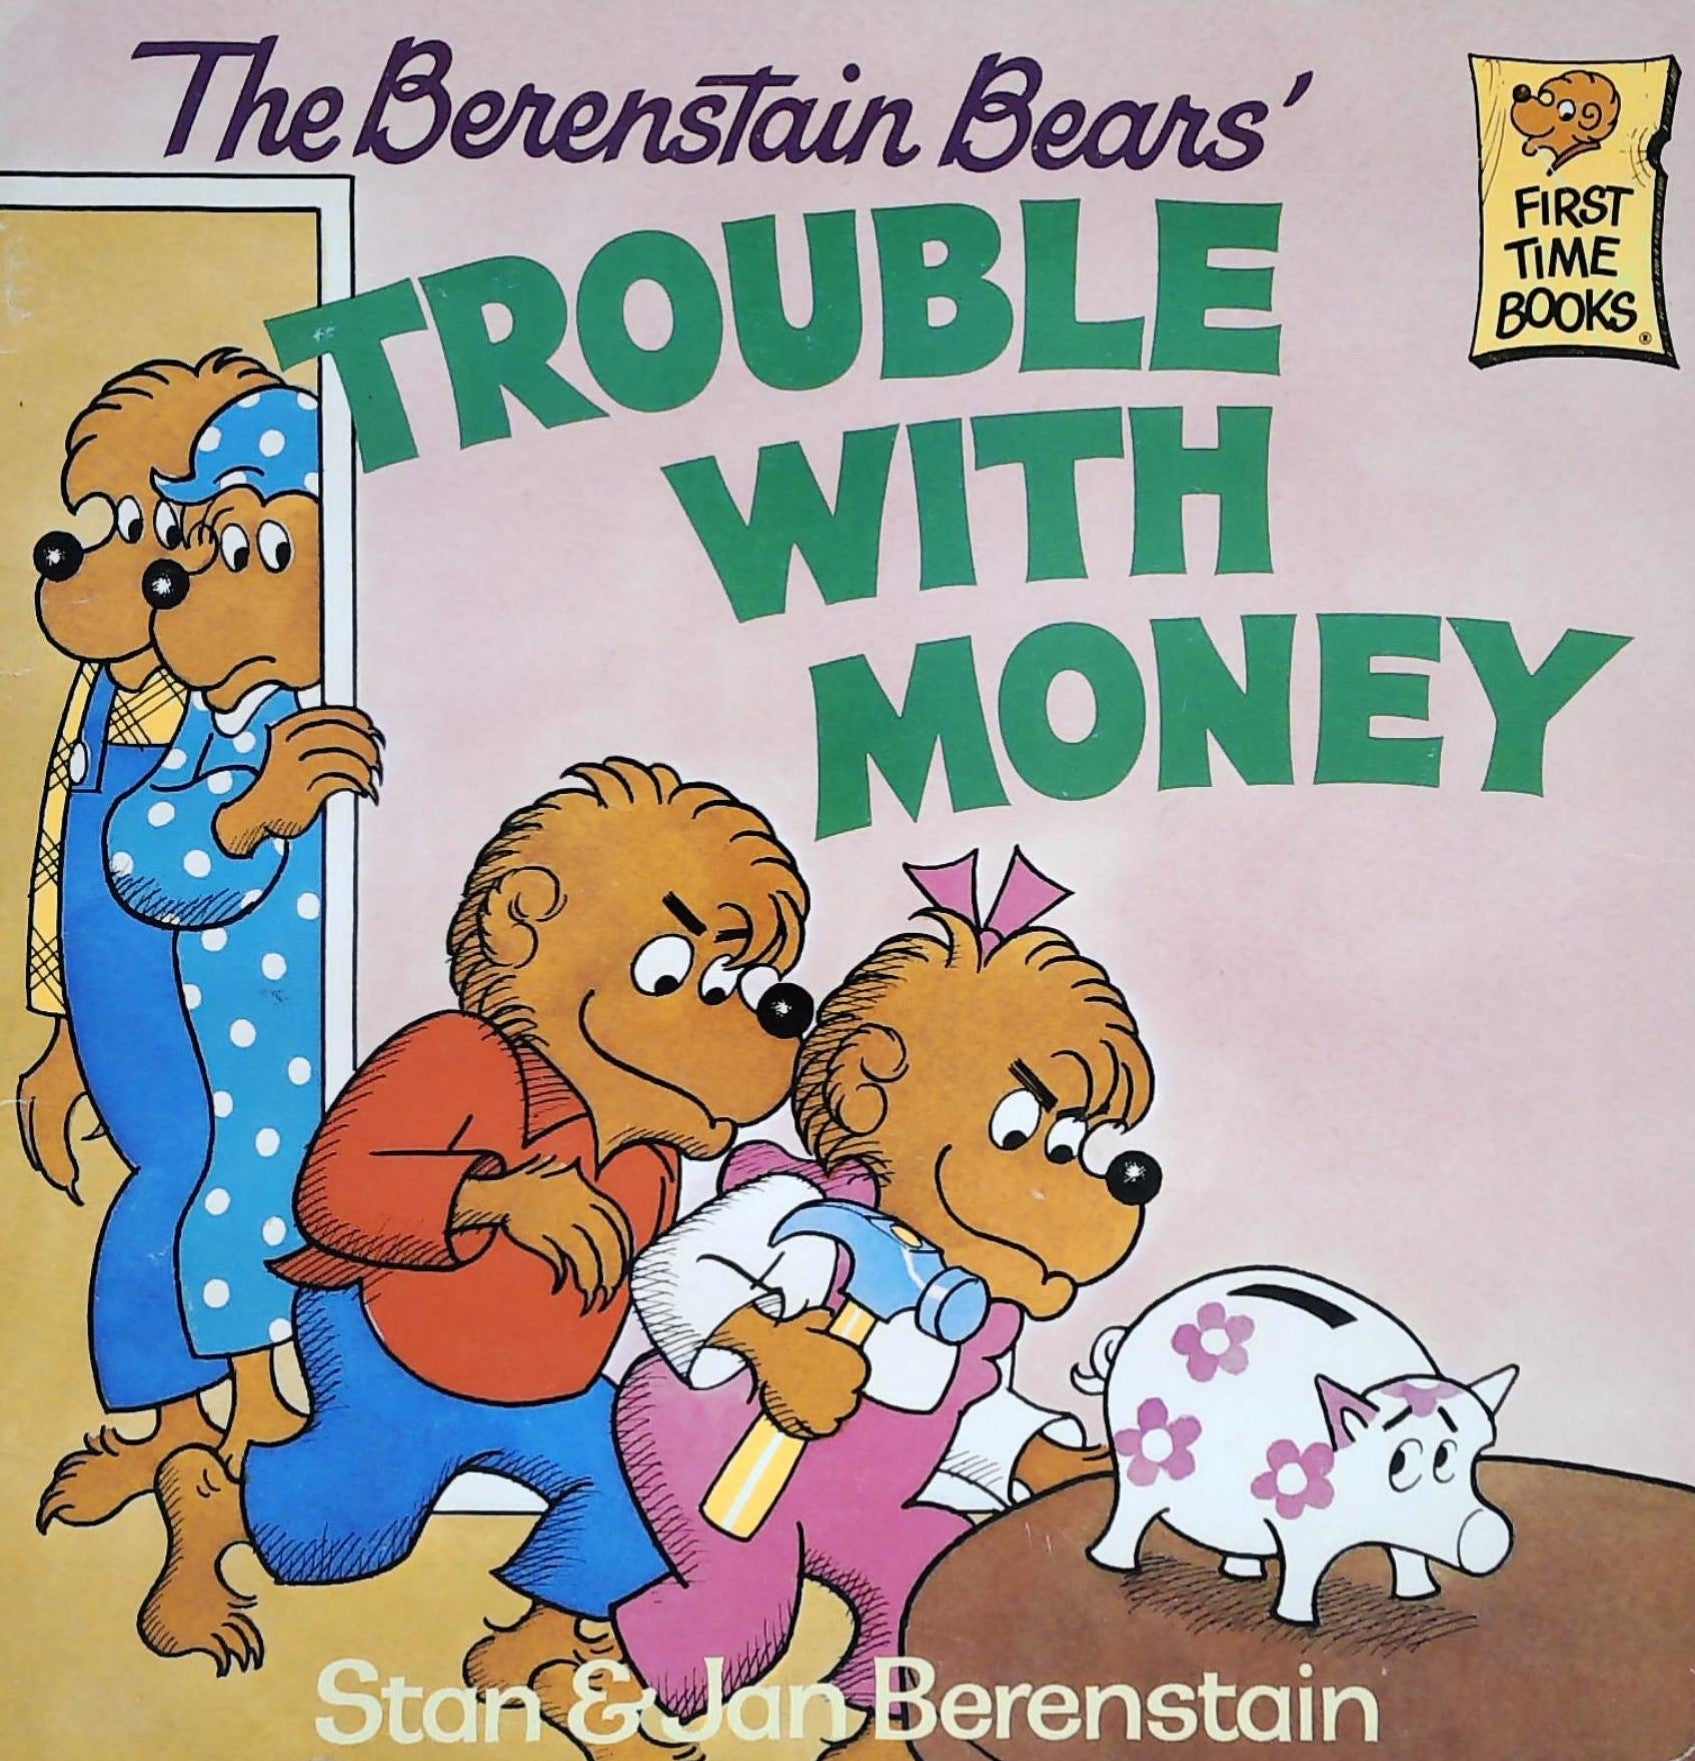 Livre ISBN 0394859170 The Berenstain Bears : Trouble With Money (Stan & Jan Berenstain)